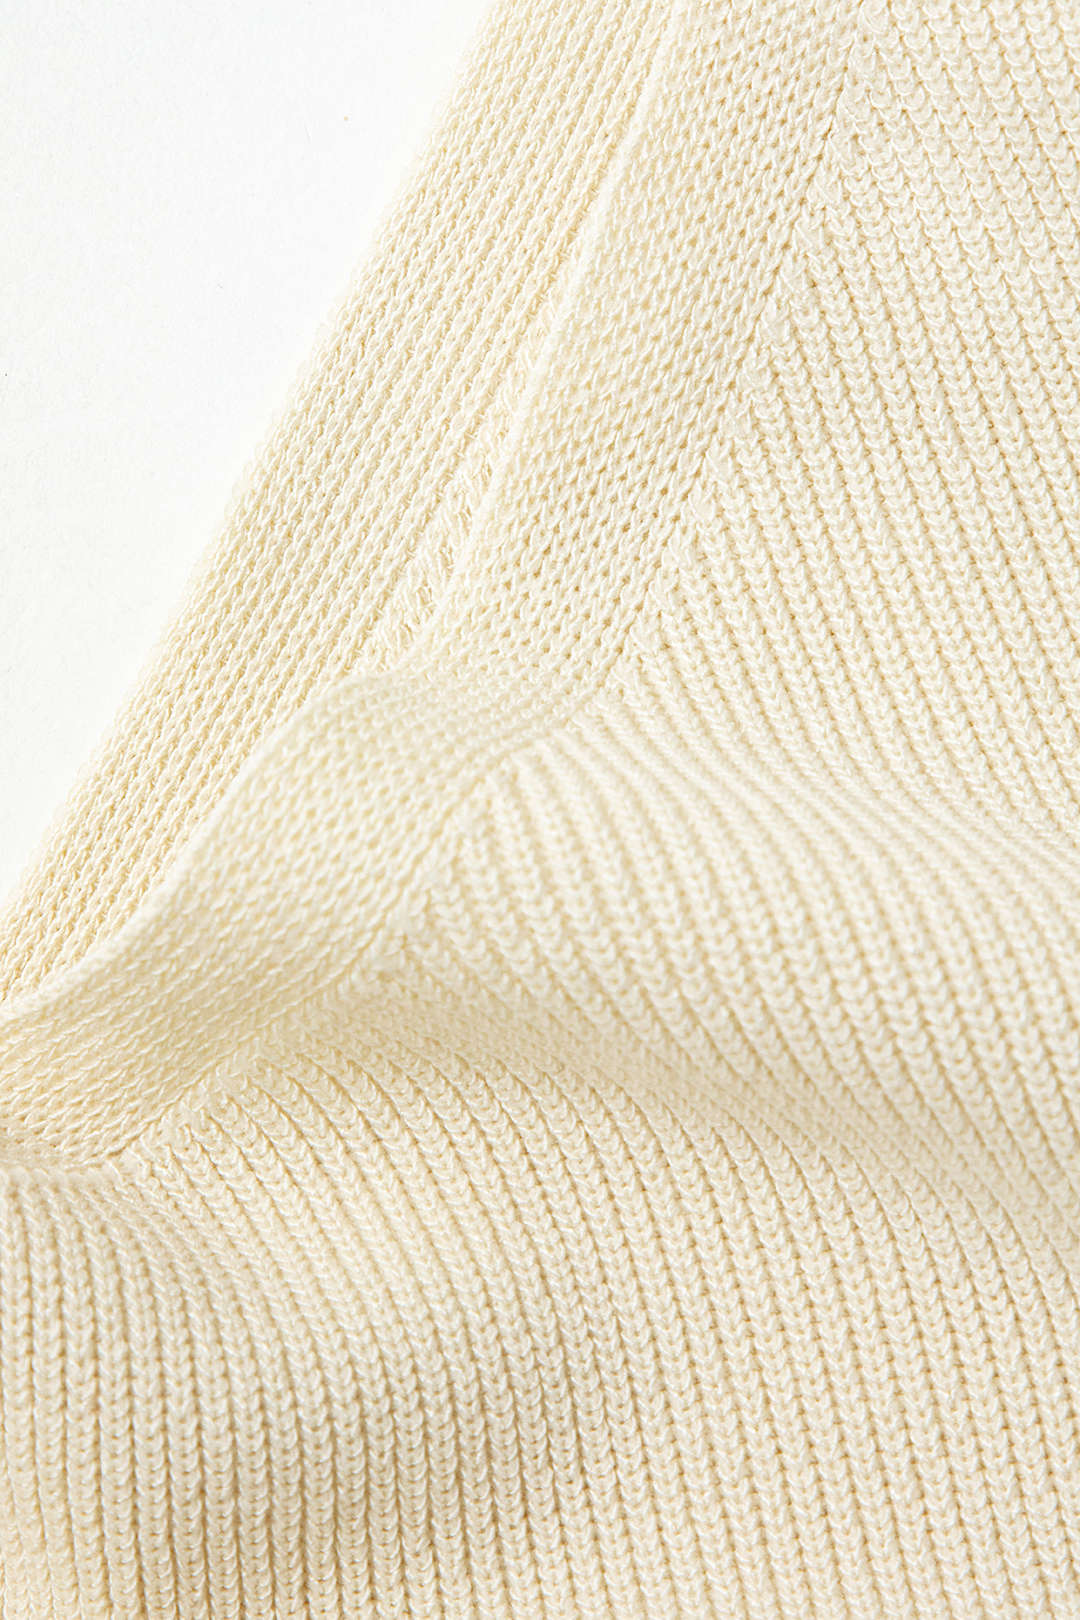 Asymmetrical One Shoulder Slit Knit Maxi Dress